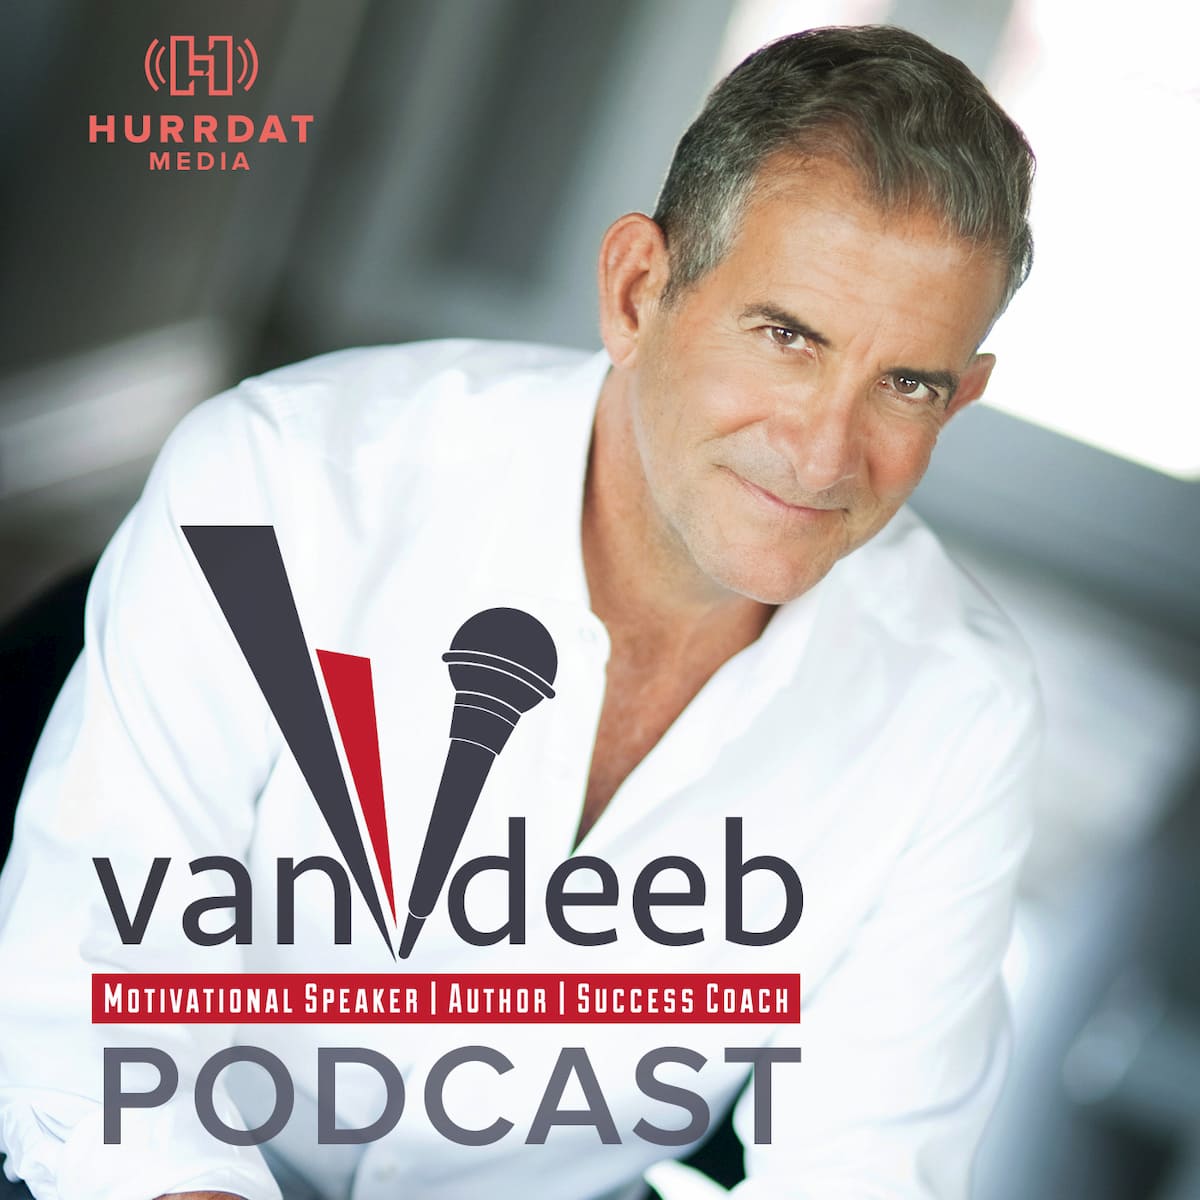 The Van Deeb Podcast